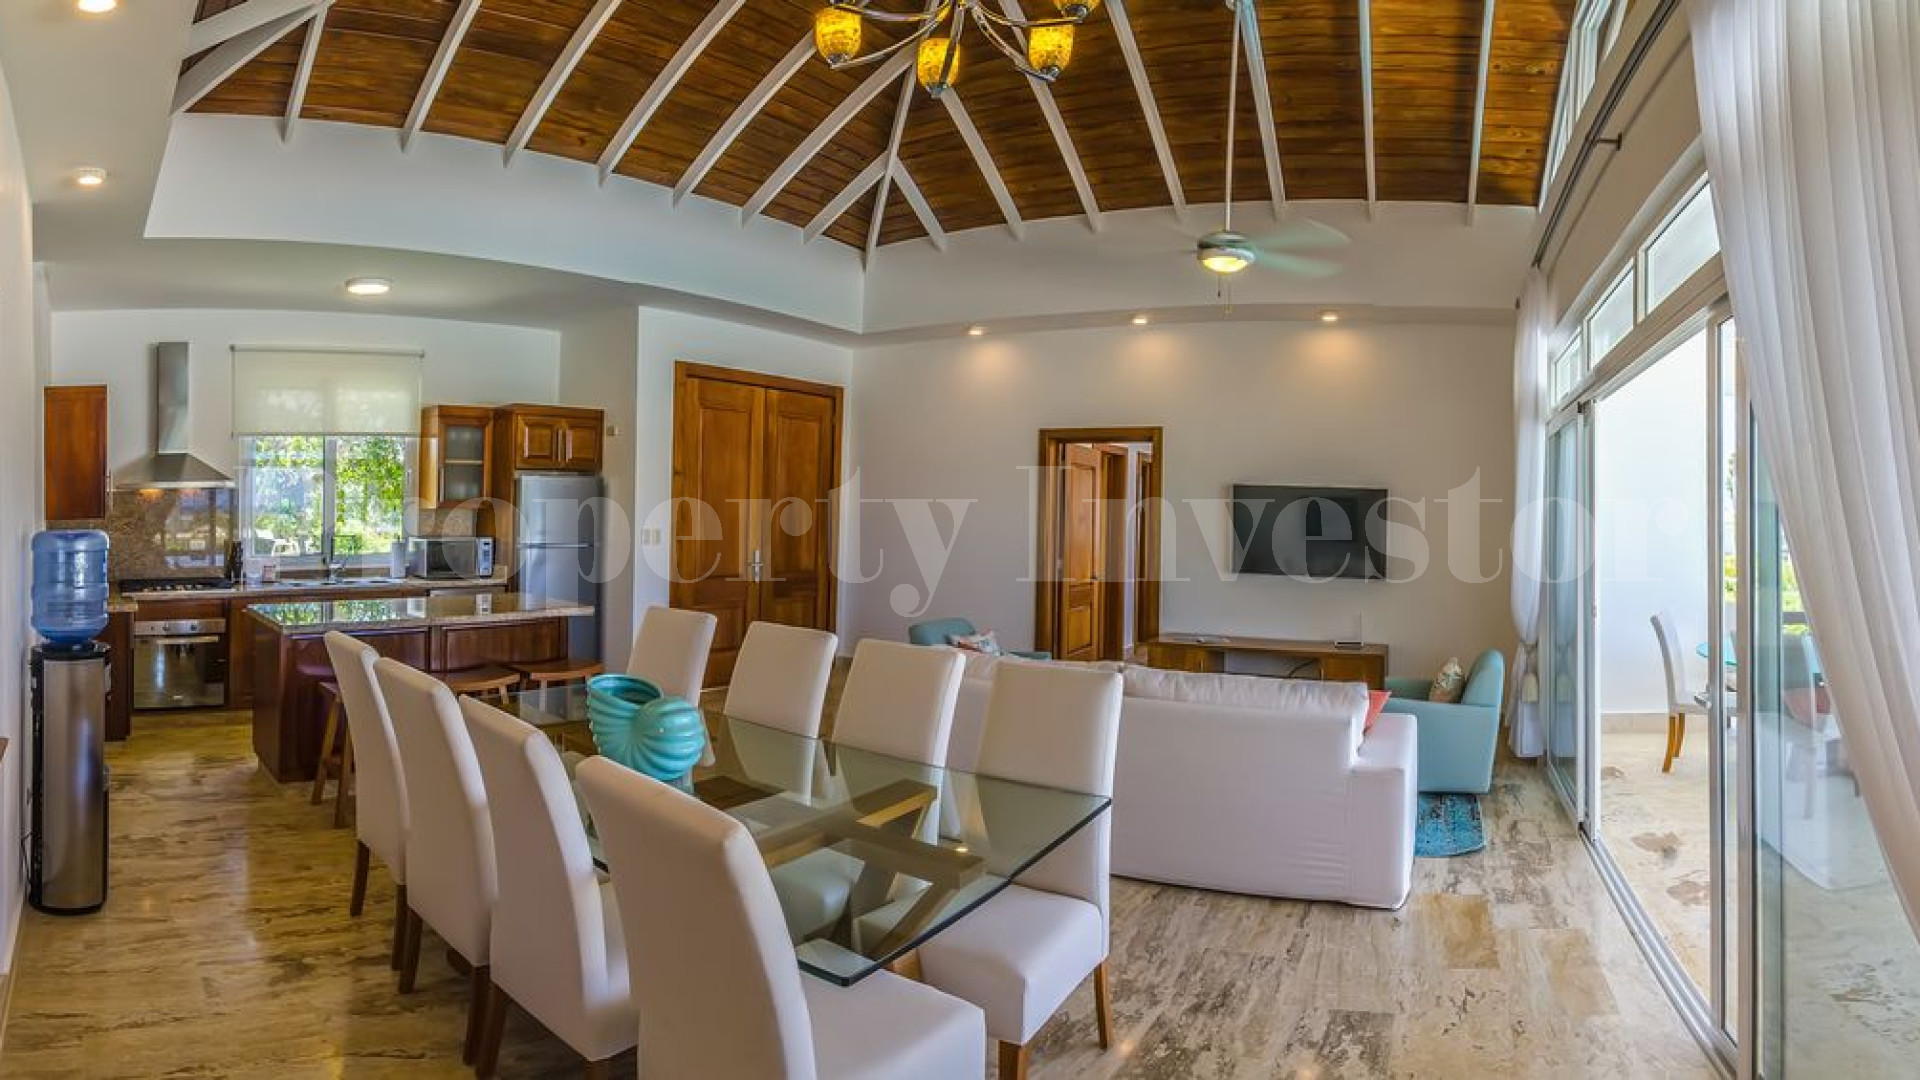 3 Bedroom Oceanview Villa in the Dominican Republic with 30 Year Financing (Villa 14)